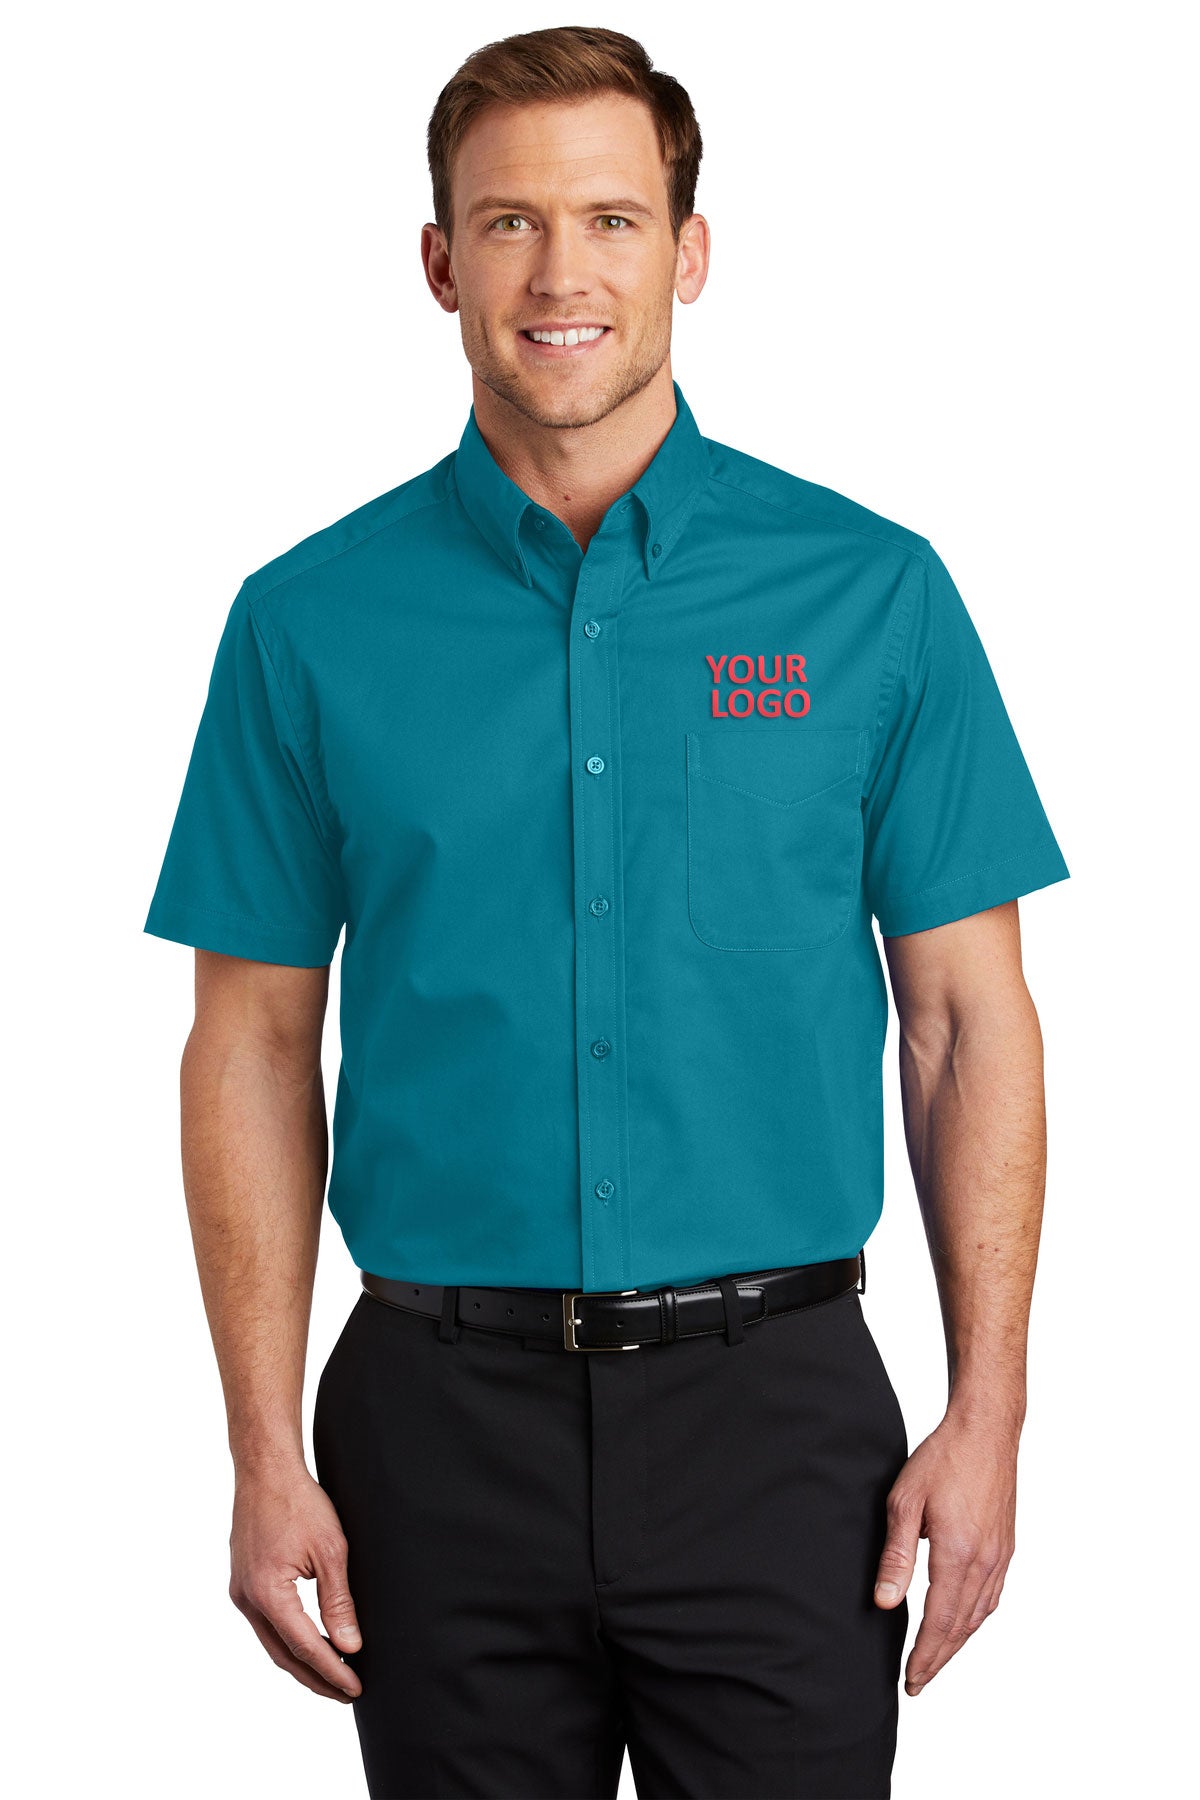 Port Authority Teal Green S508 custom work shirts